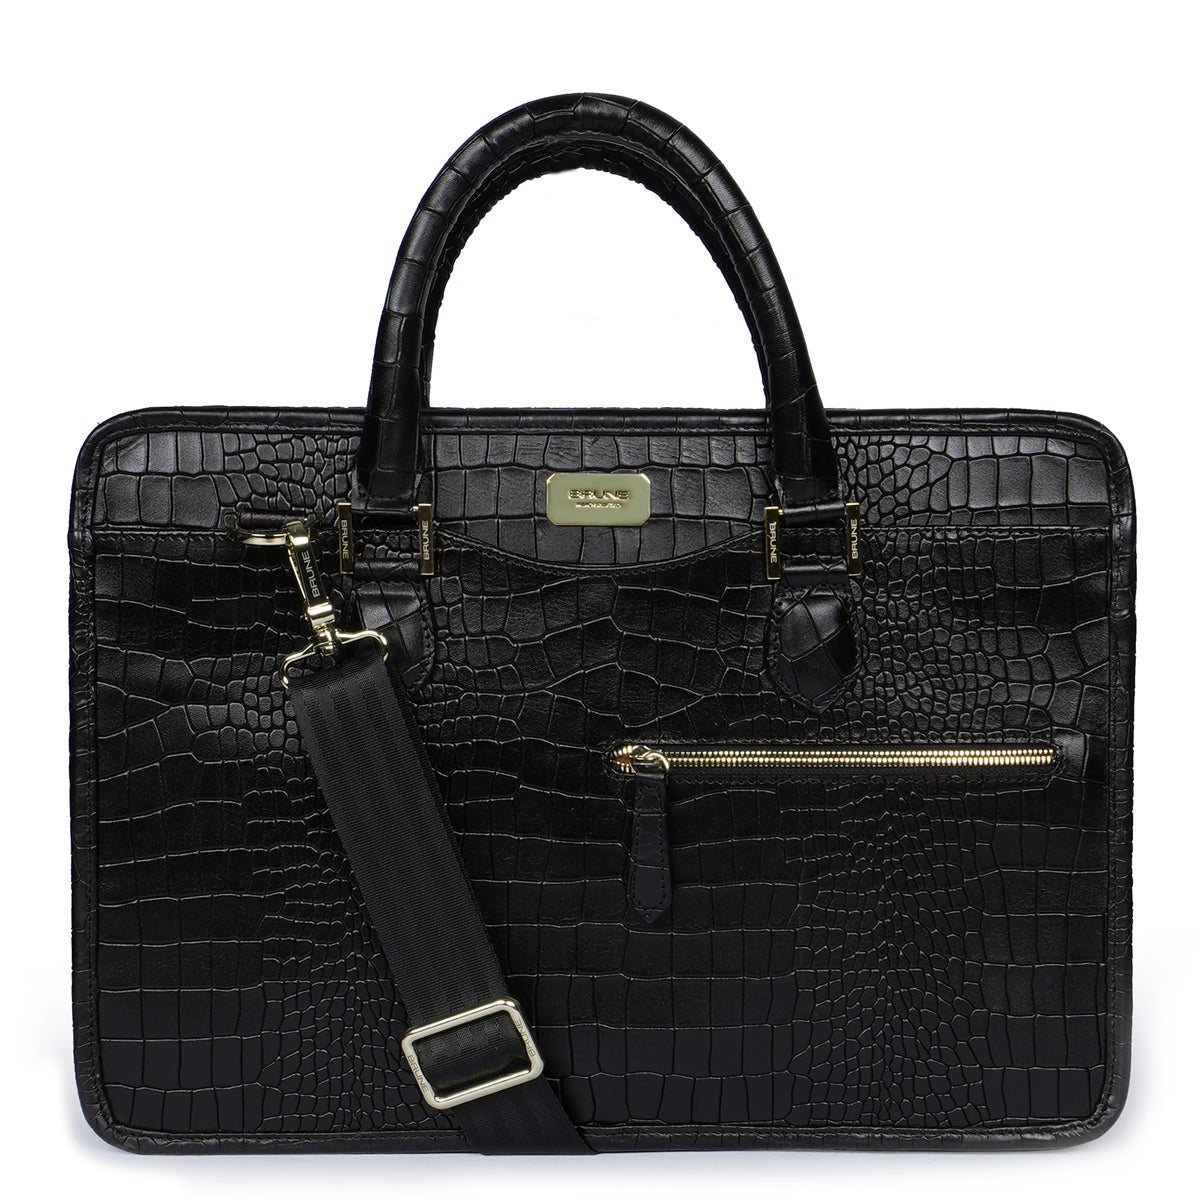 Efficient Laptop Briefcase Black Croco Leather Bag for Work and Travel by Brune & Bareskin